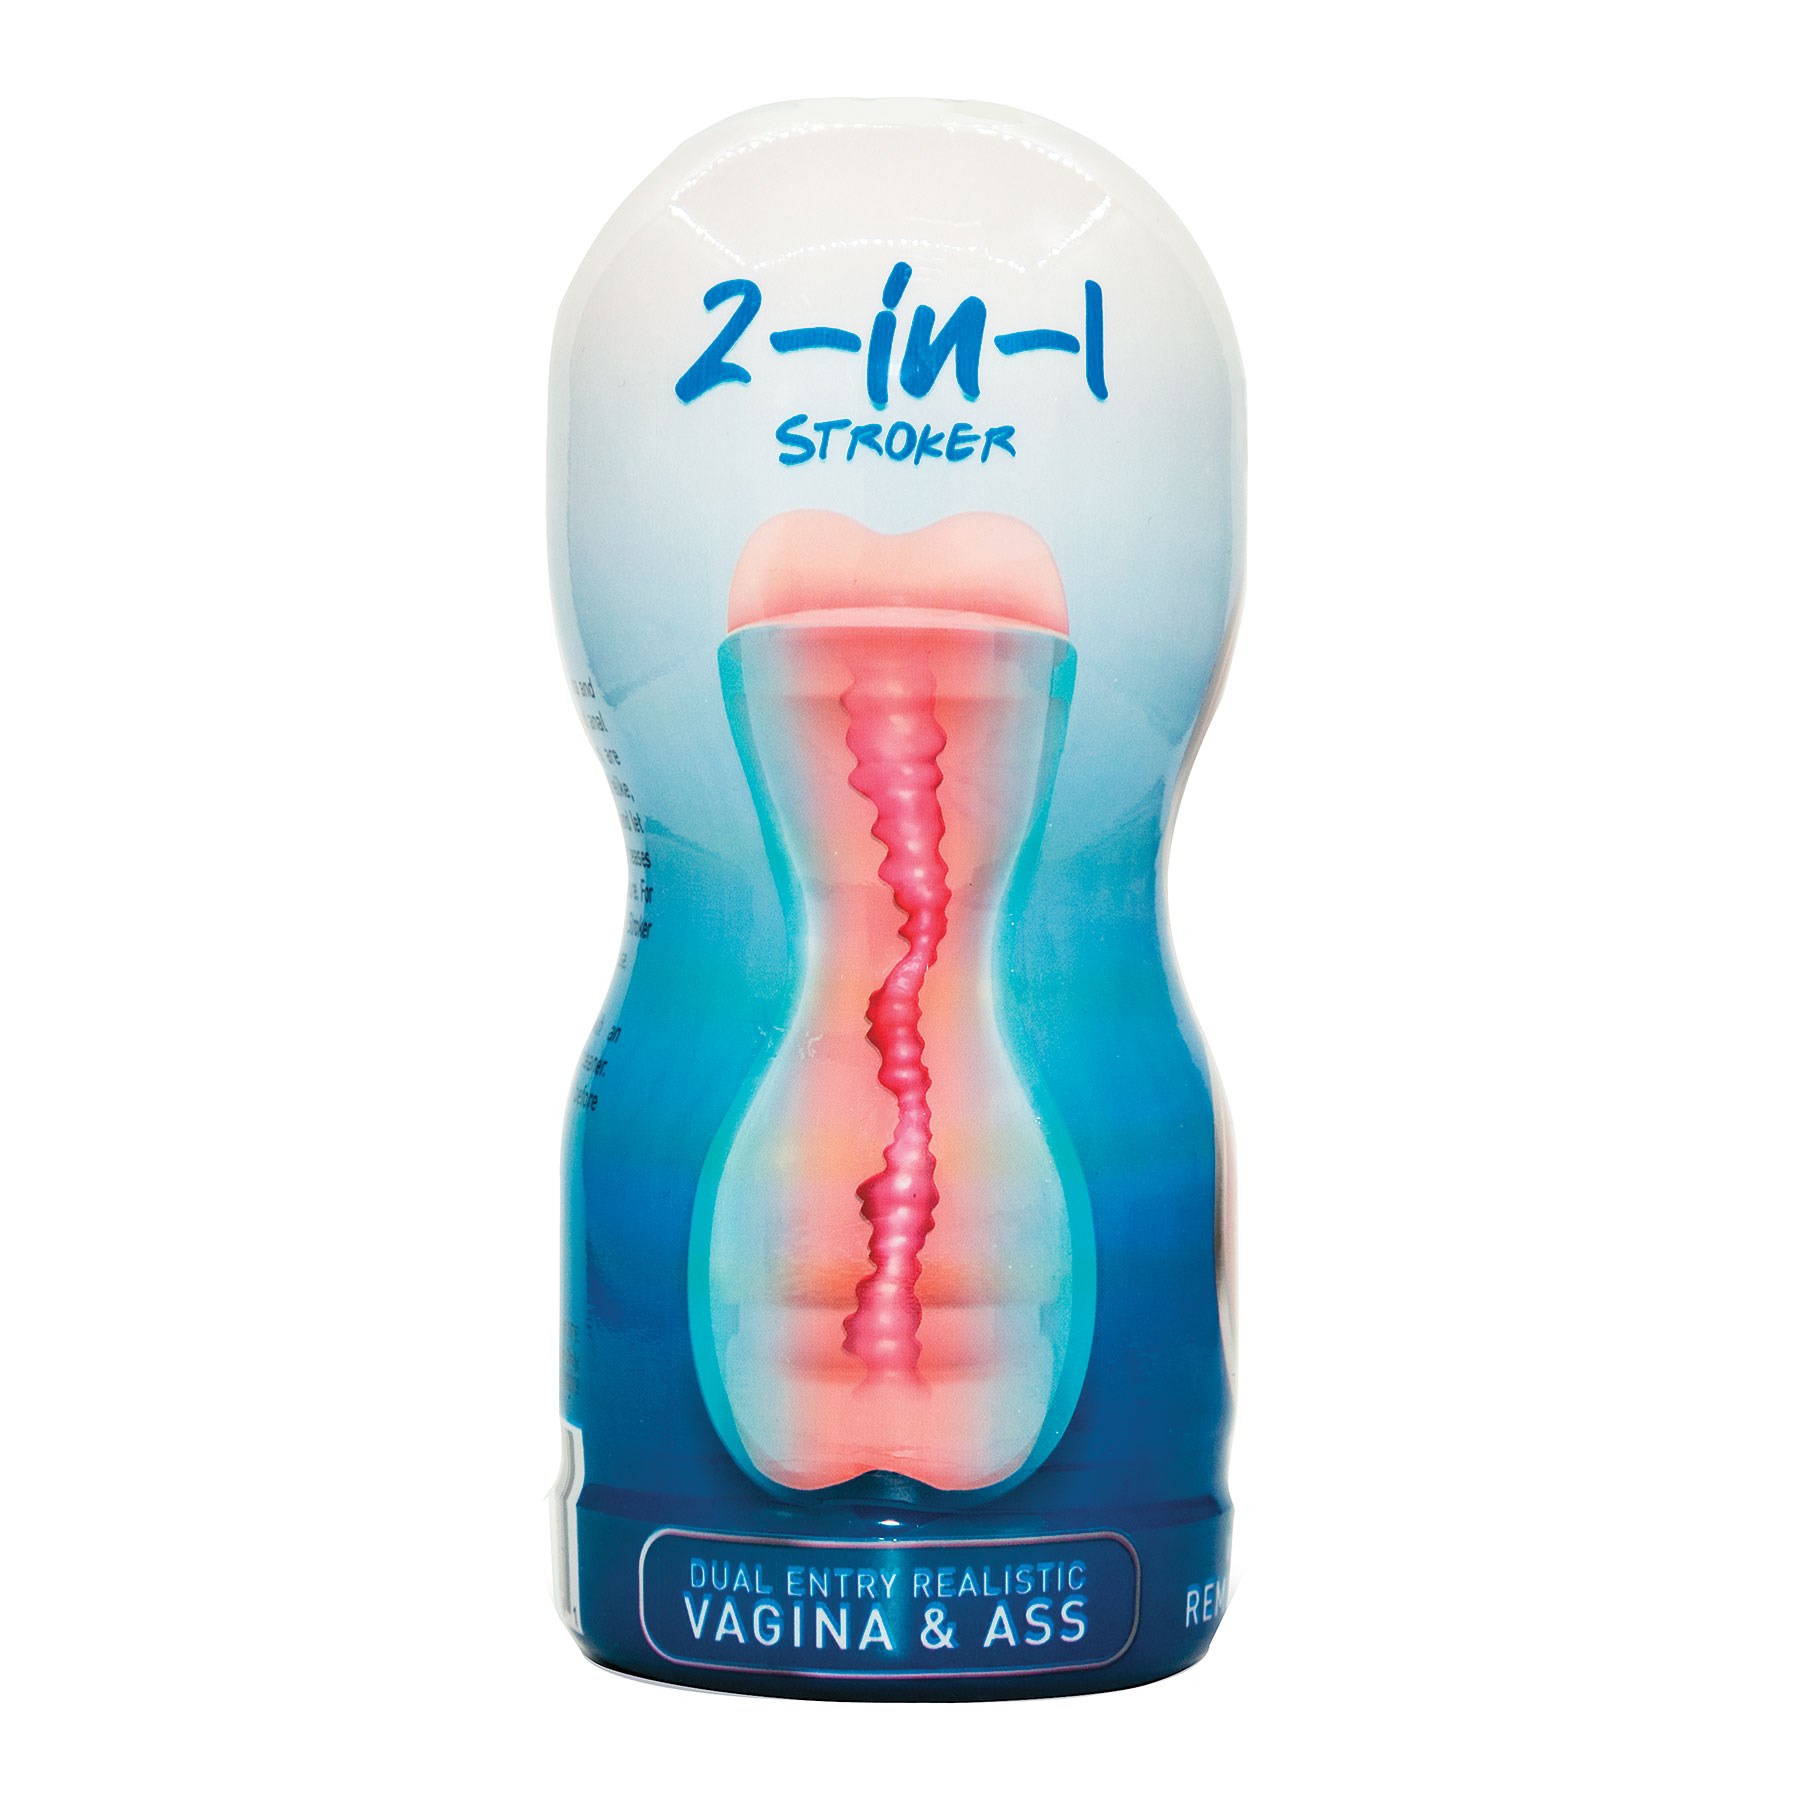 2-In-1 Stroker Realistic Vagina & Ass single bottle